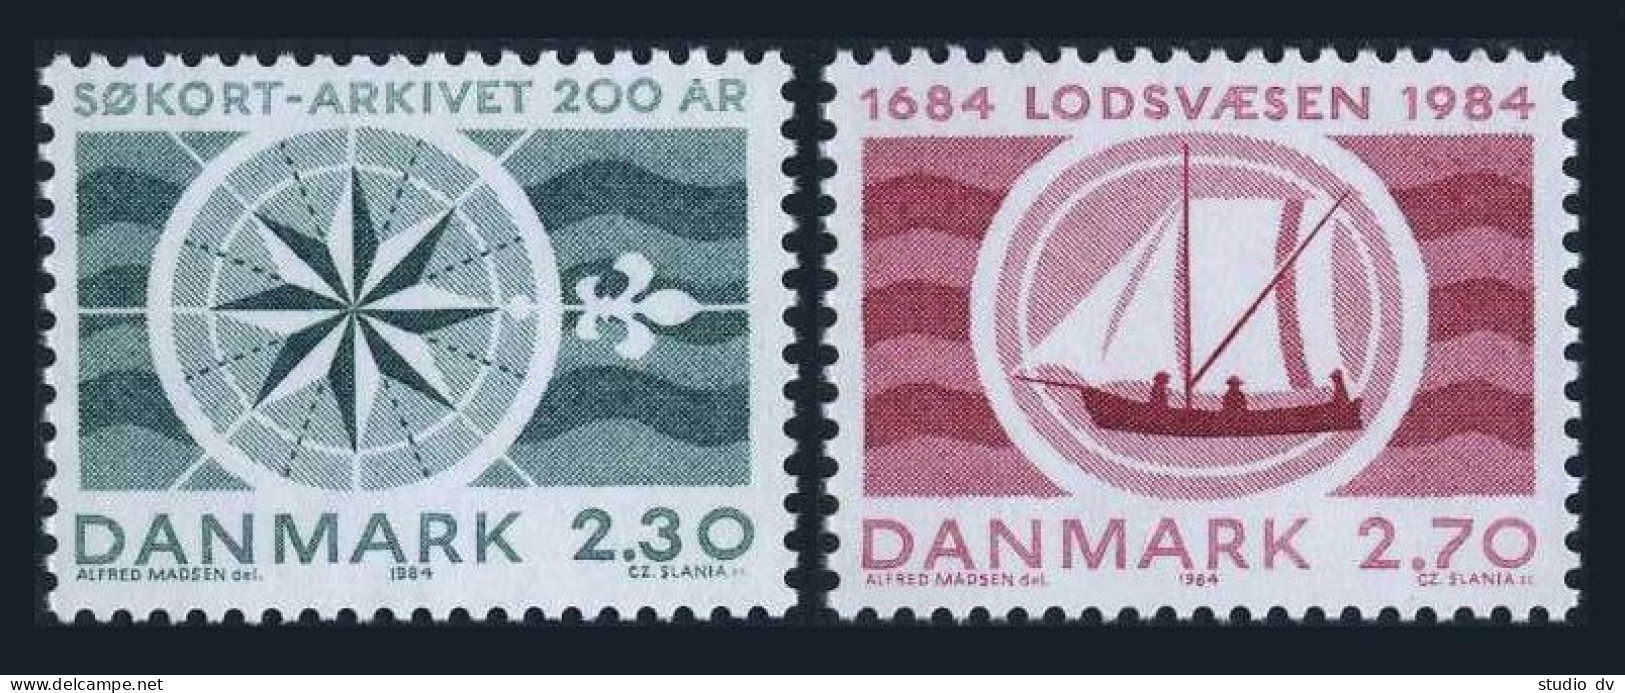 Denmark 751-752,MNH.Michel 802-803. Hydro-graphic Dept;Pilotage Service,1984. - Unused Stamps